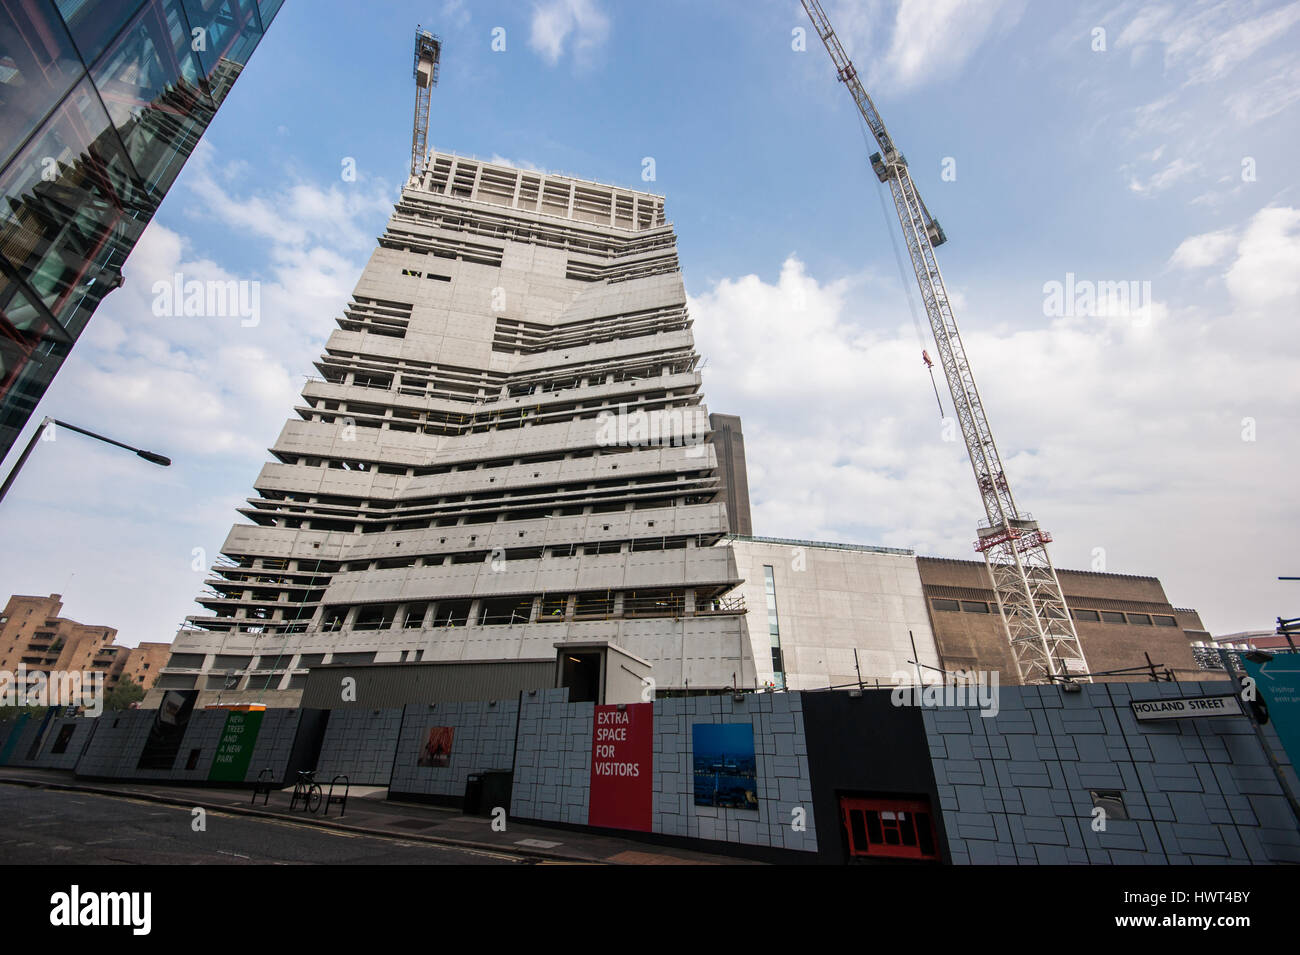 Tate Modern expansion by Herzog & de Meuron architects under ...